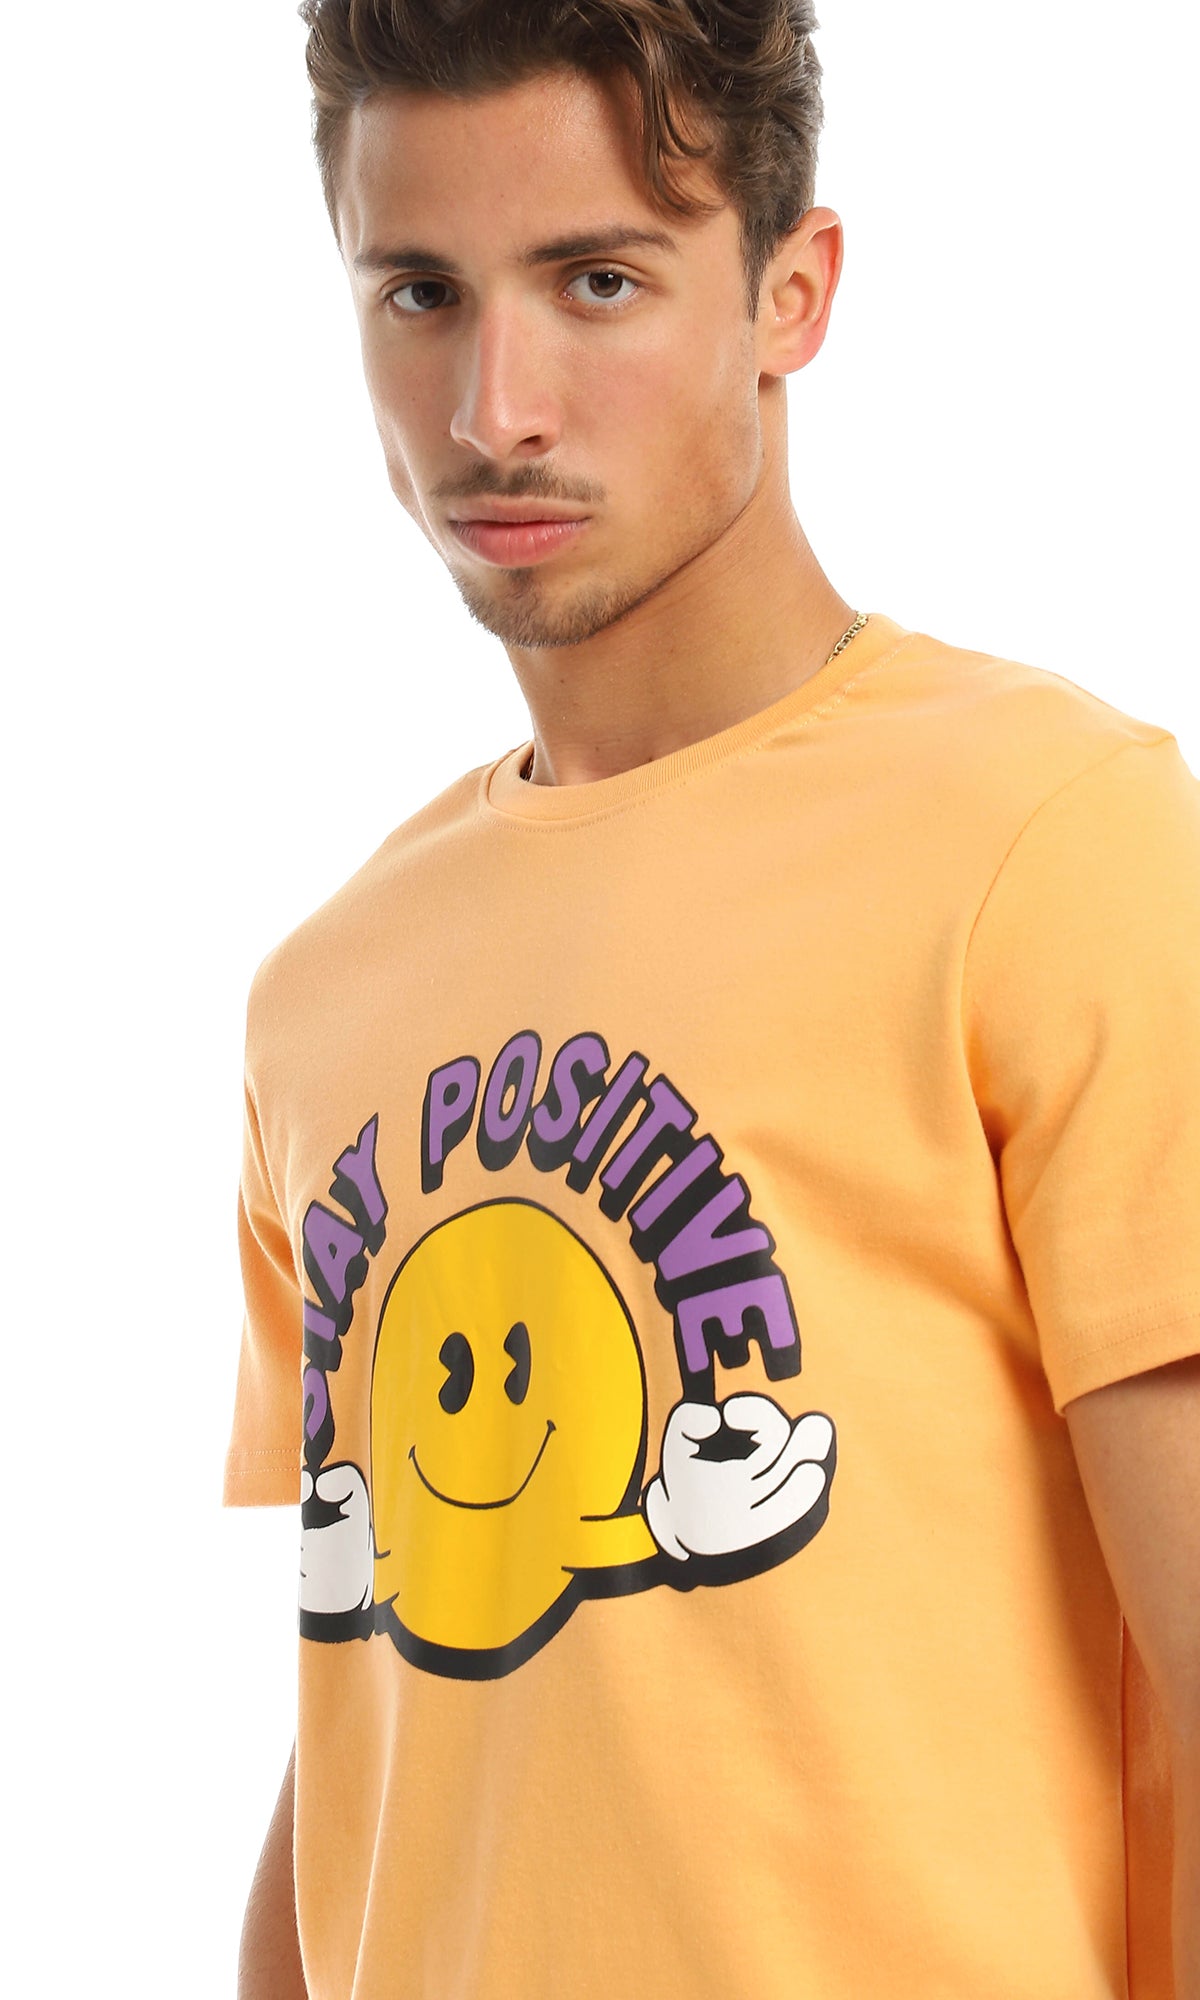 97410 "Stay Positive" Printed Orange Round T-Shirt